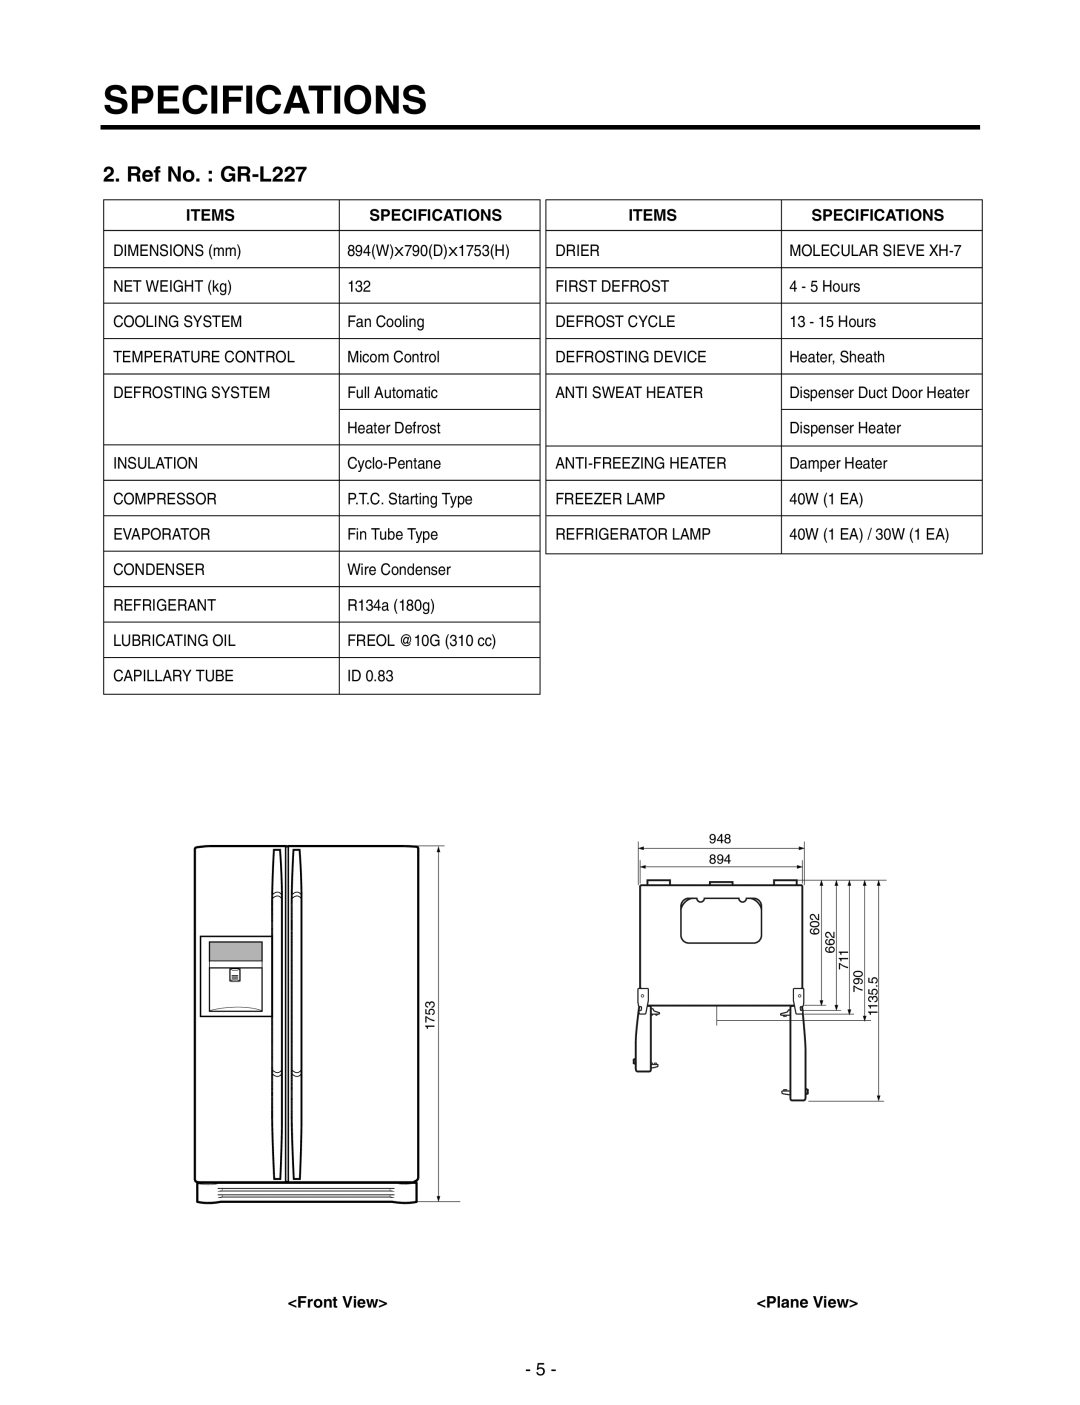 LG Electronics GR-P257/L257, GR-P227/L227 service manual Ref No. GR-L227, Specifications, Items, Front View 